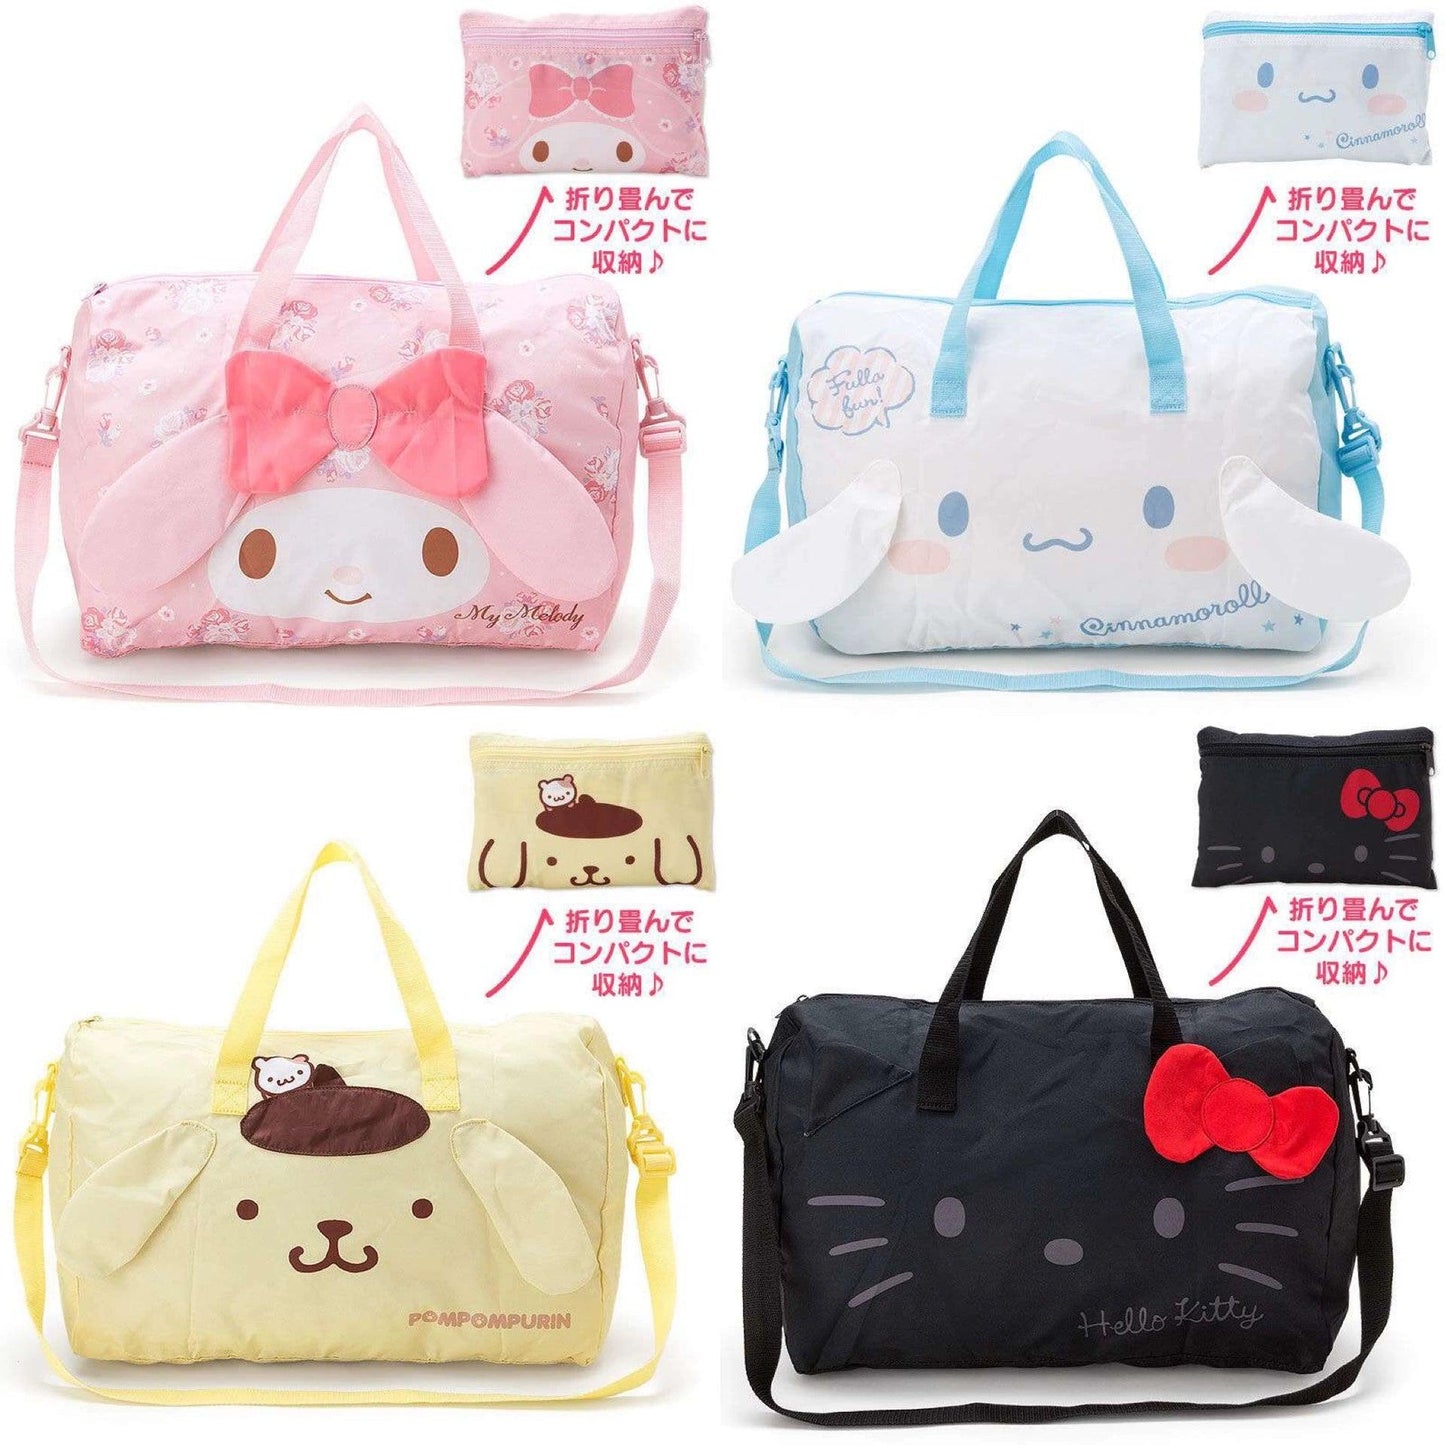 Sanrio Foldable Duffle Bag (MM/HK/PM/CN) - InKawaiiShop <span style="background-color:rgb(246,247,248);color:rgb(28,30,33);"> Sanrio Foldable Duffle Bag (MM/HK/PM/CN) , , sanrio , sanrio , inkawaiishop.com </span>